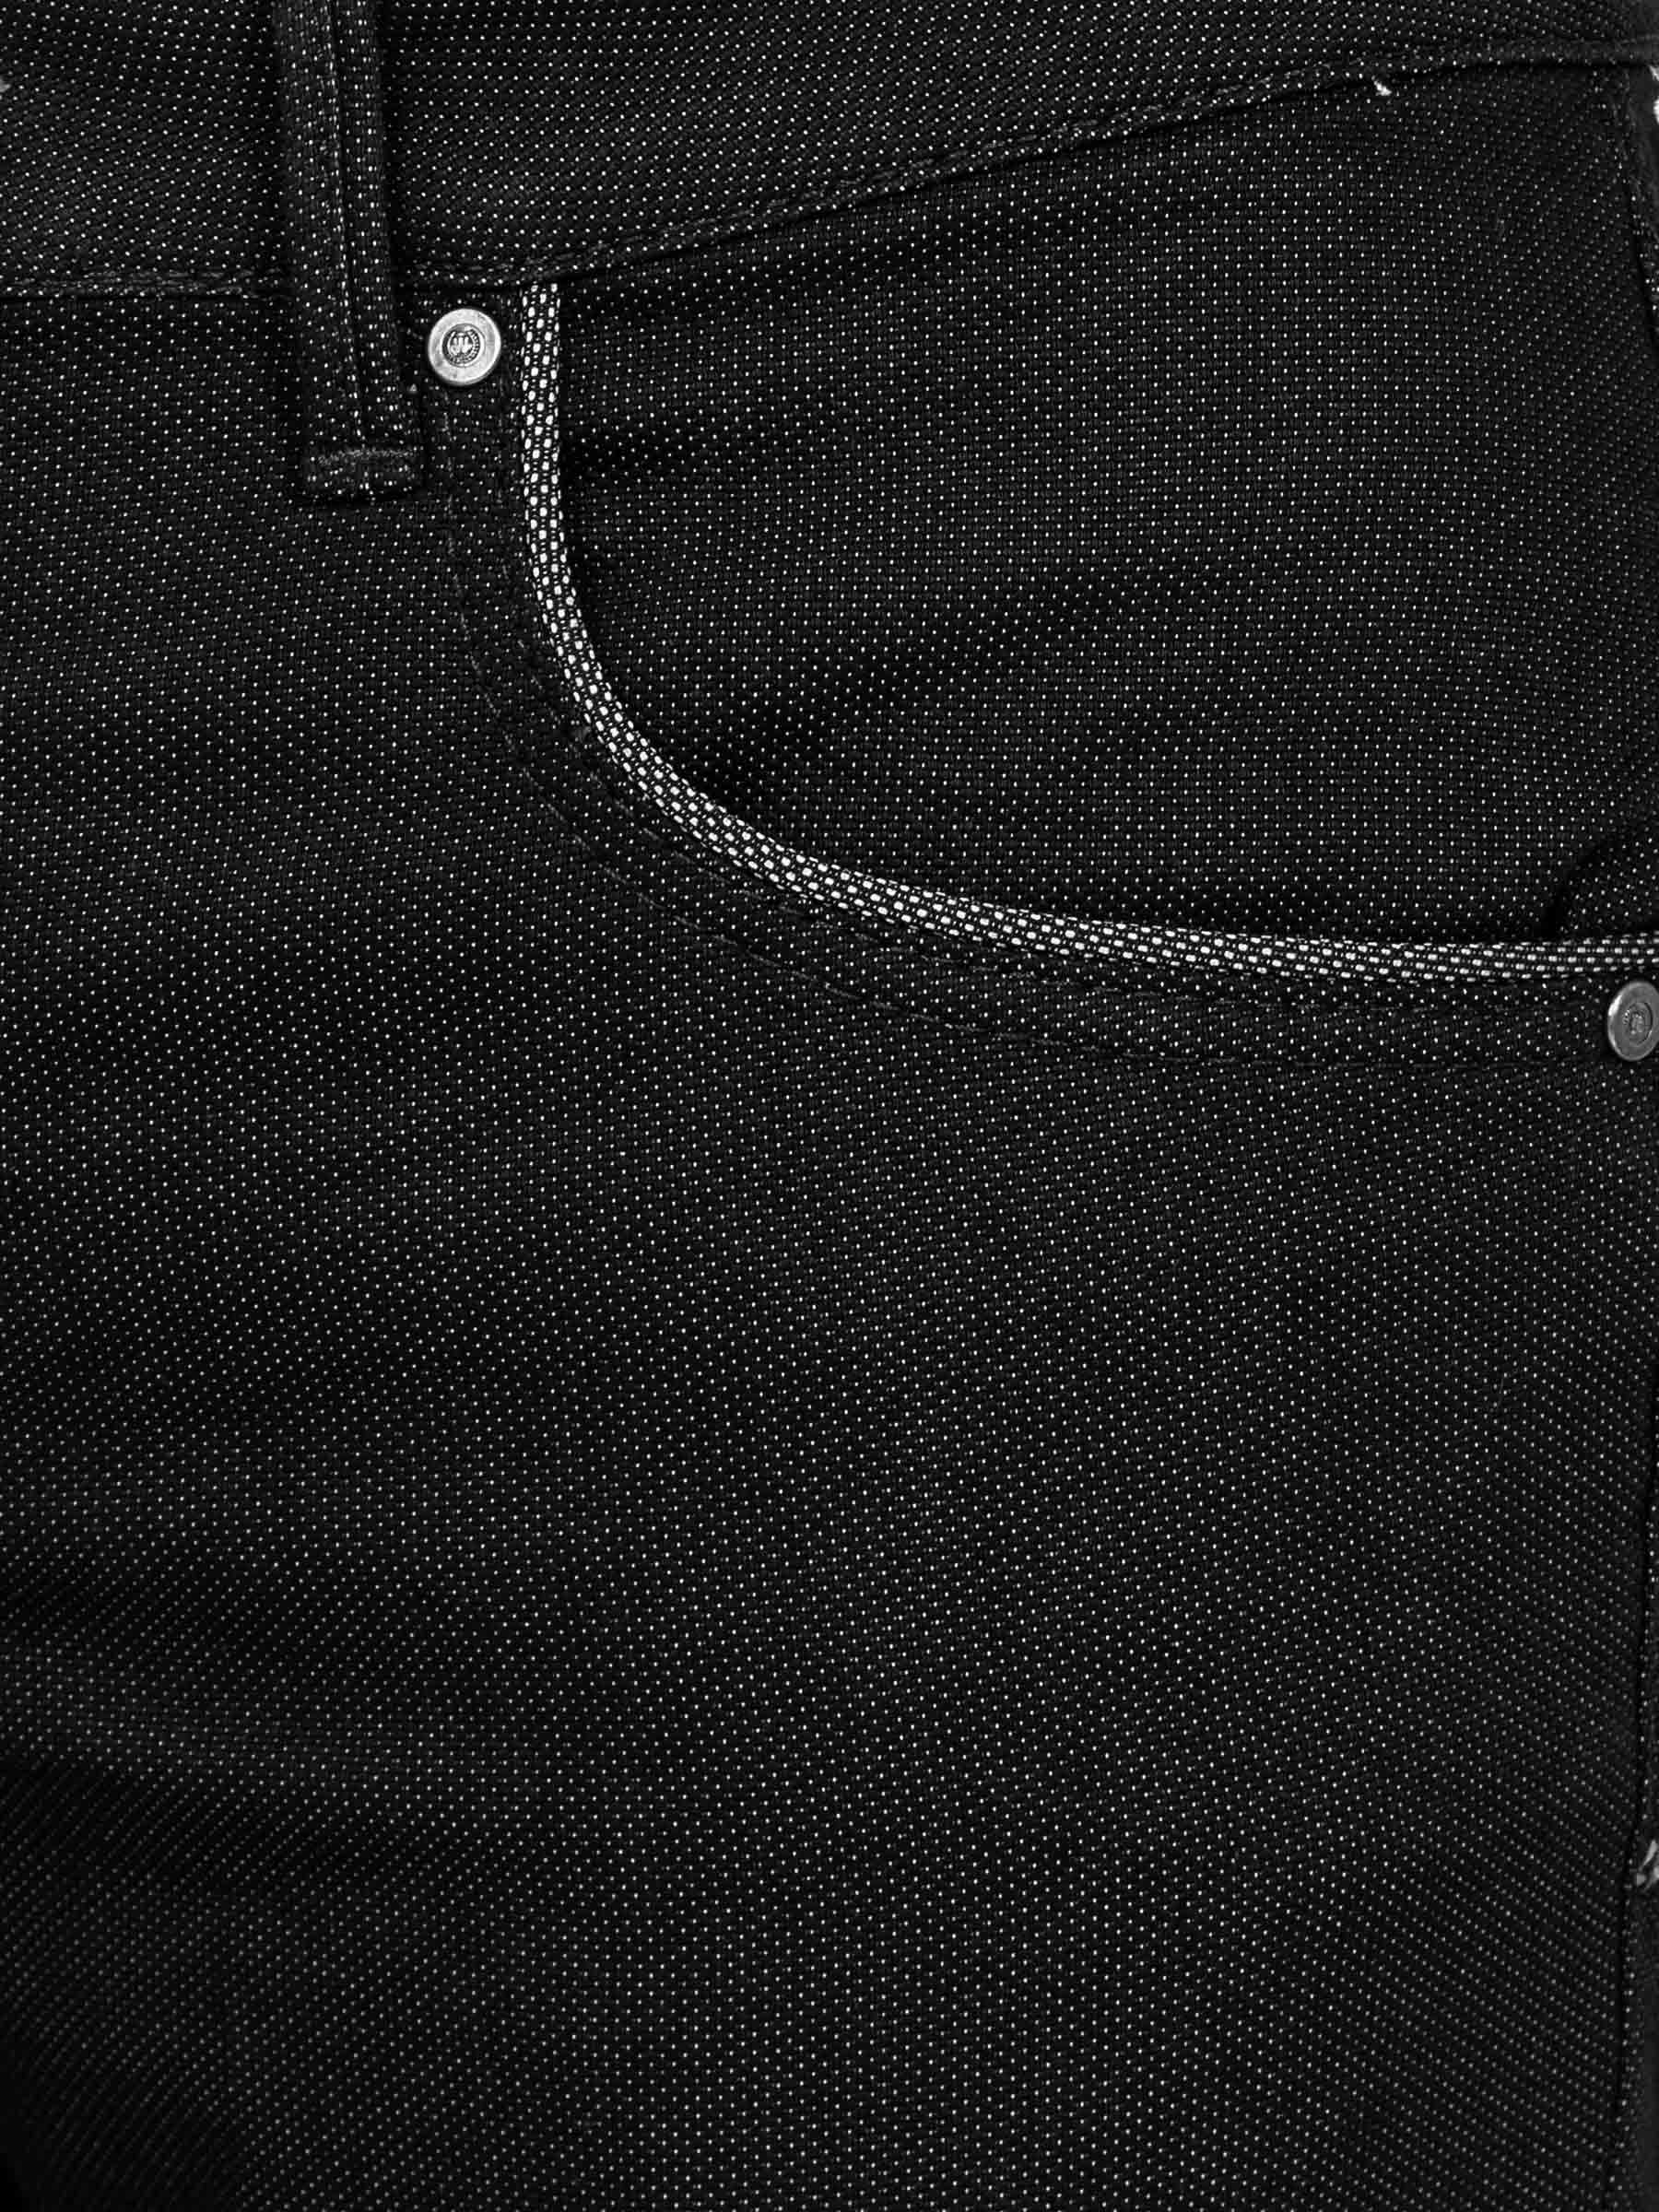 Men’s Black Jeans-Men’s slim-fit stretch jeans in Black| WAM DENIM